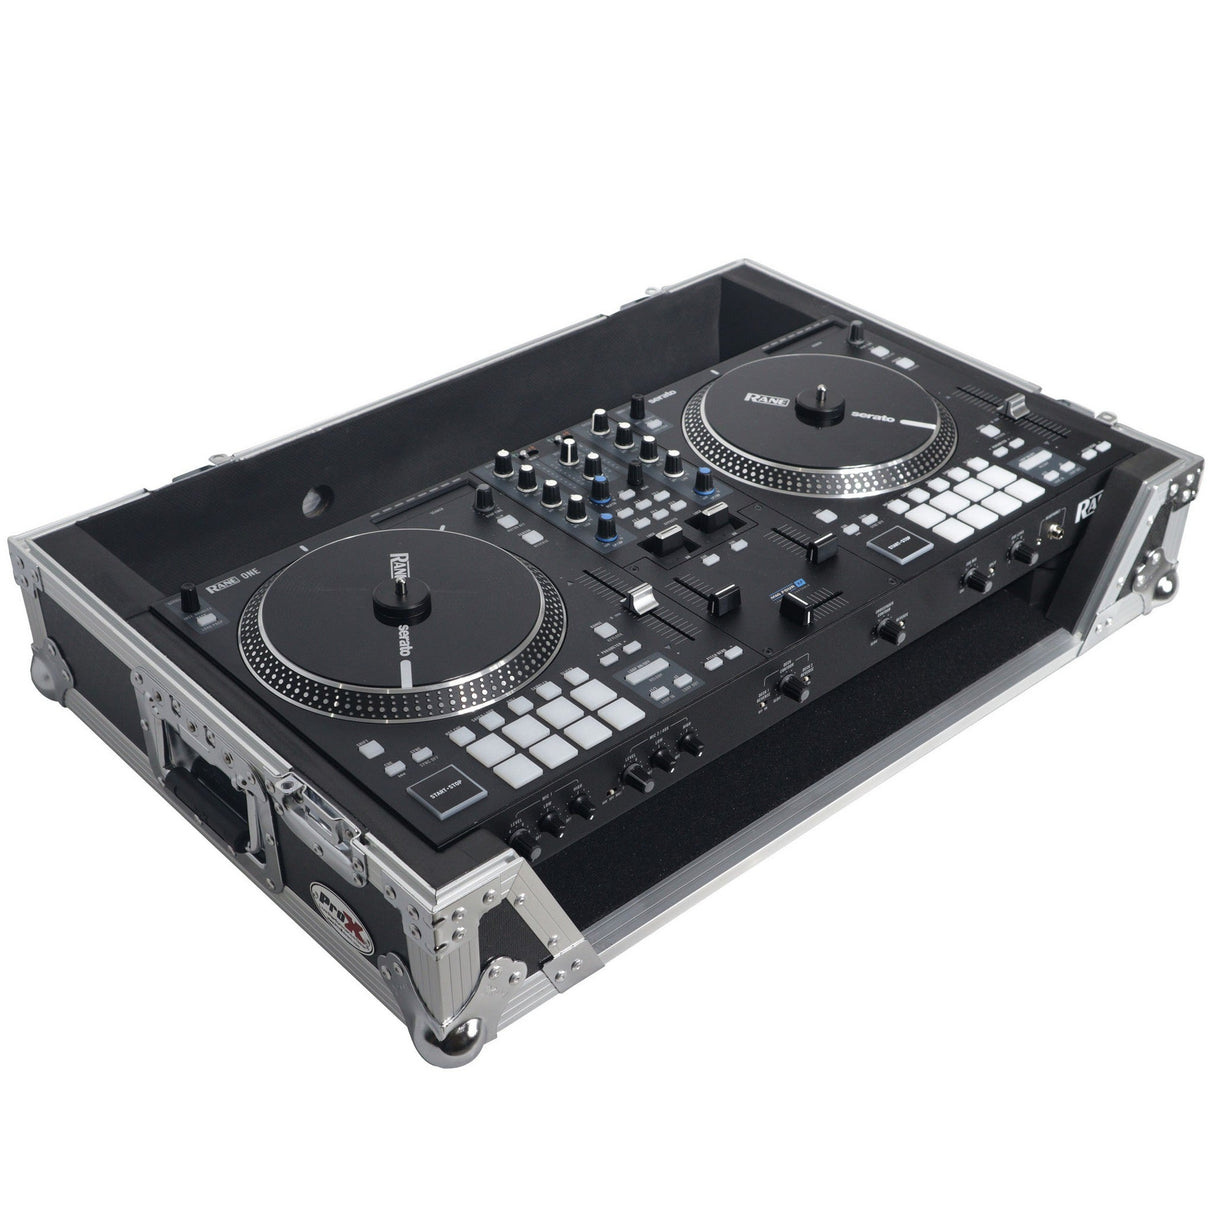 ProX XS-RANEONE Case for RANE ONE DJ Controller